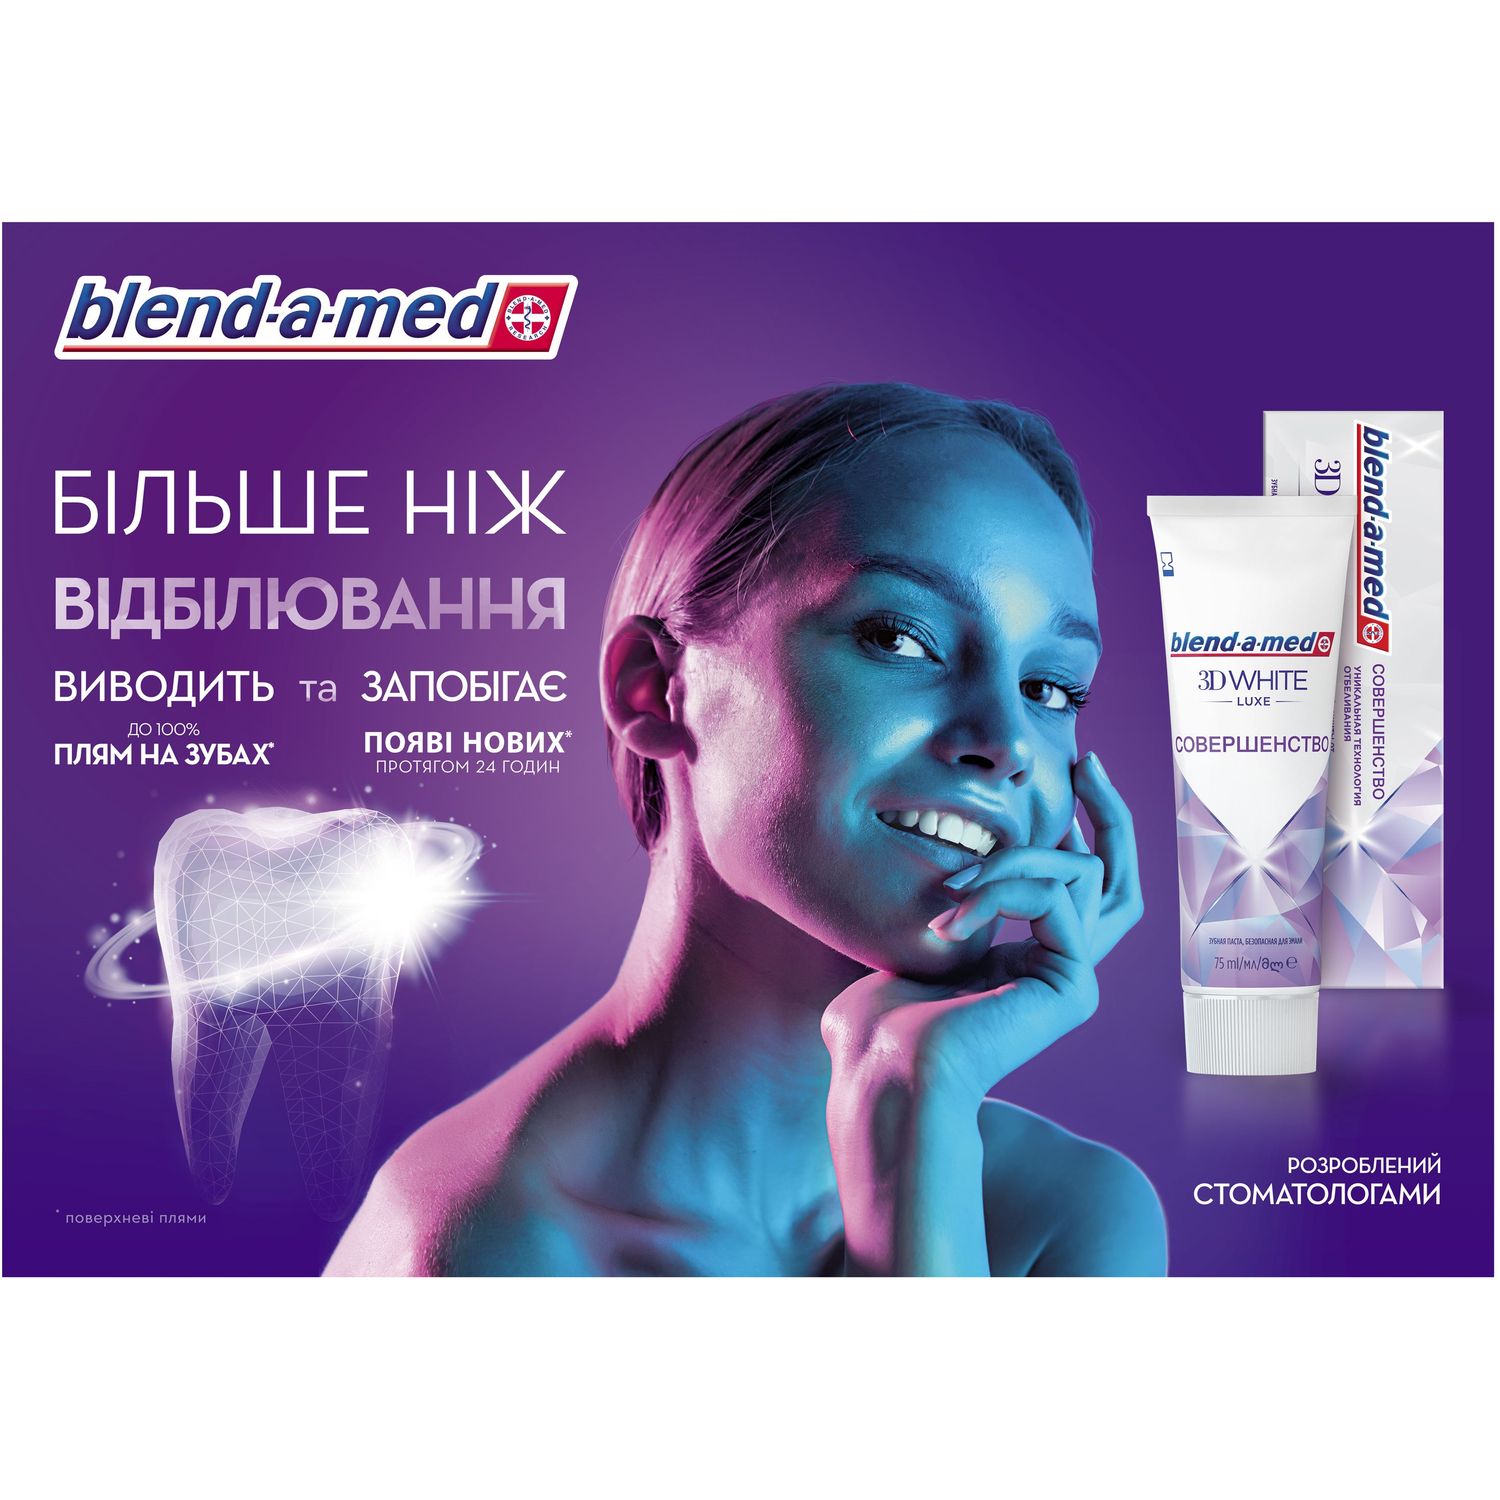 Зубная паста Blend-a-med 3D White Luxe Совершенство 75 мл - фото 4